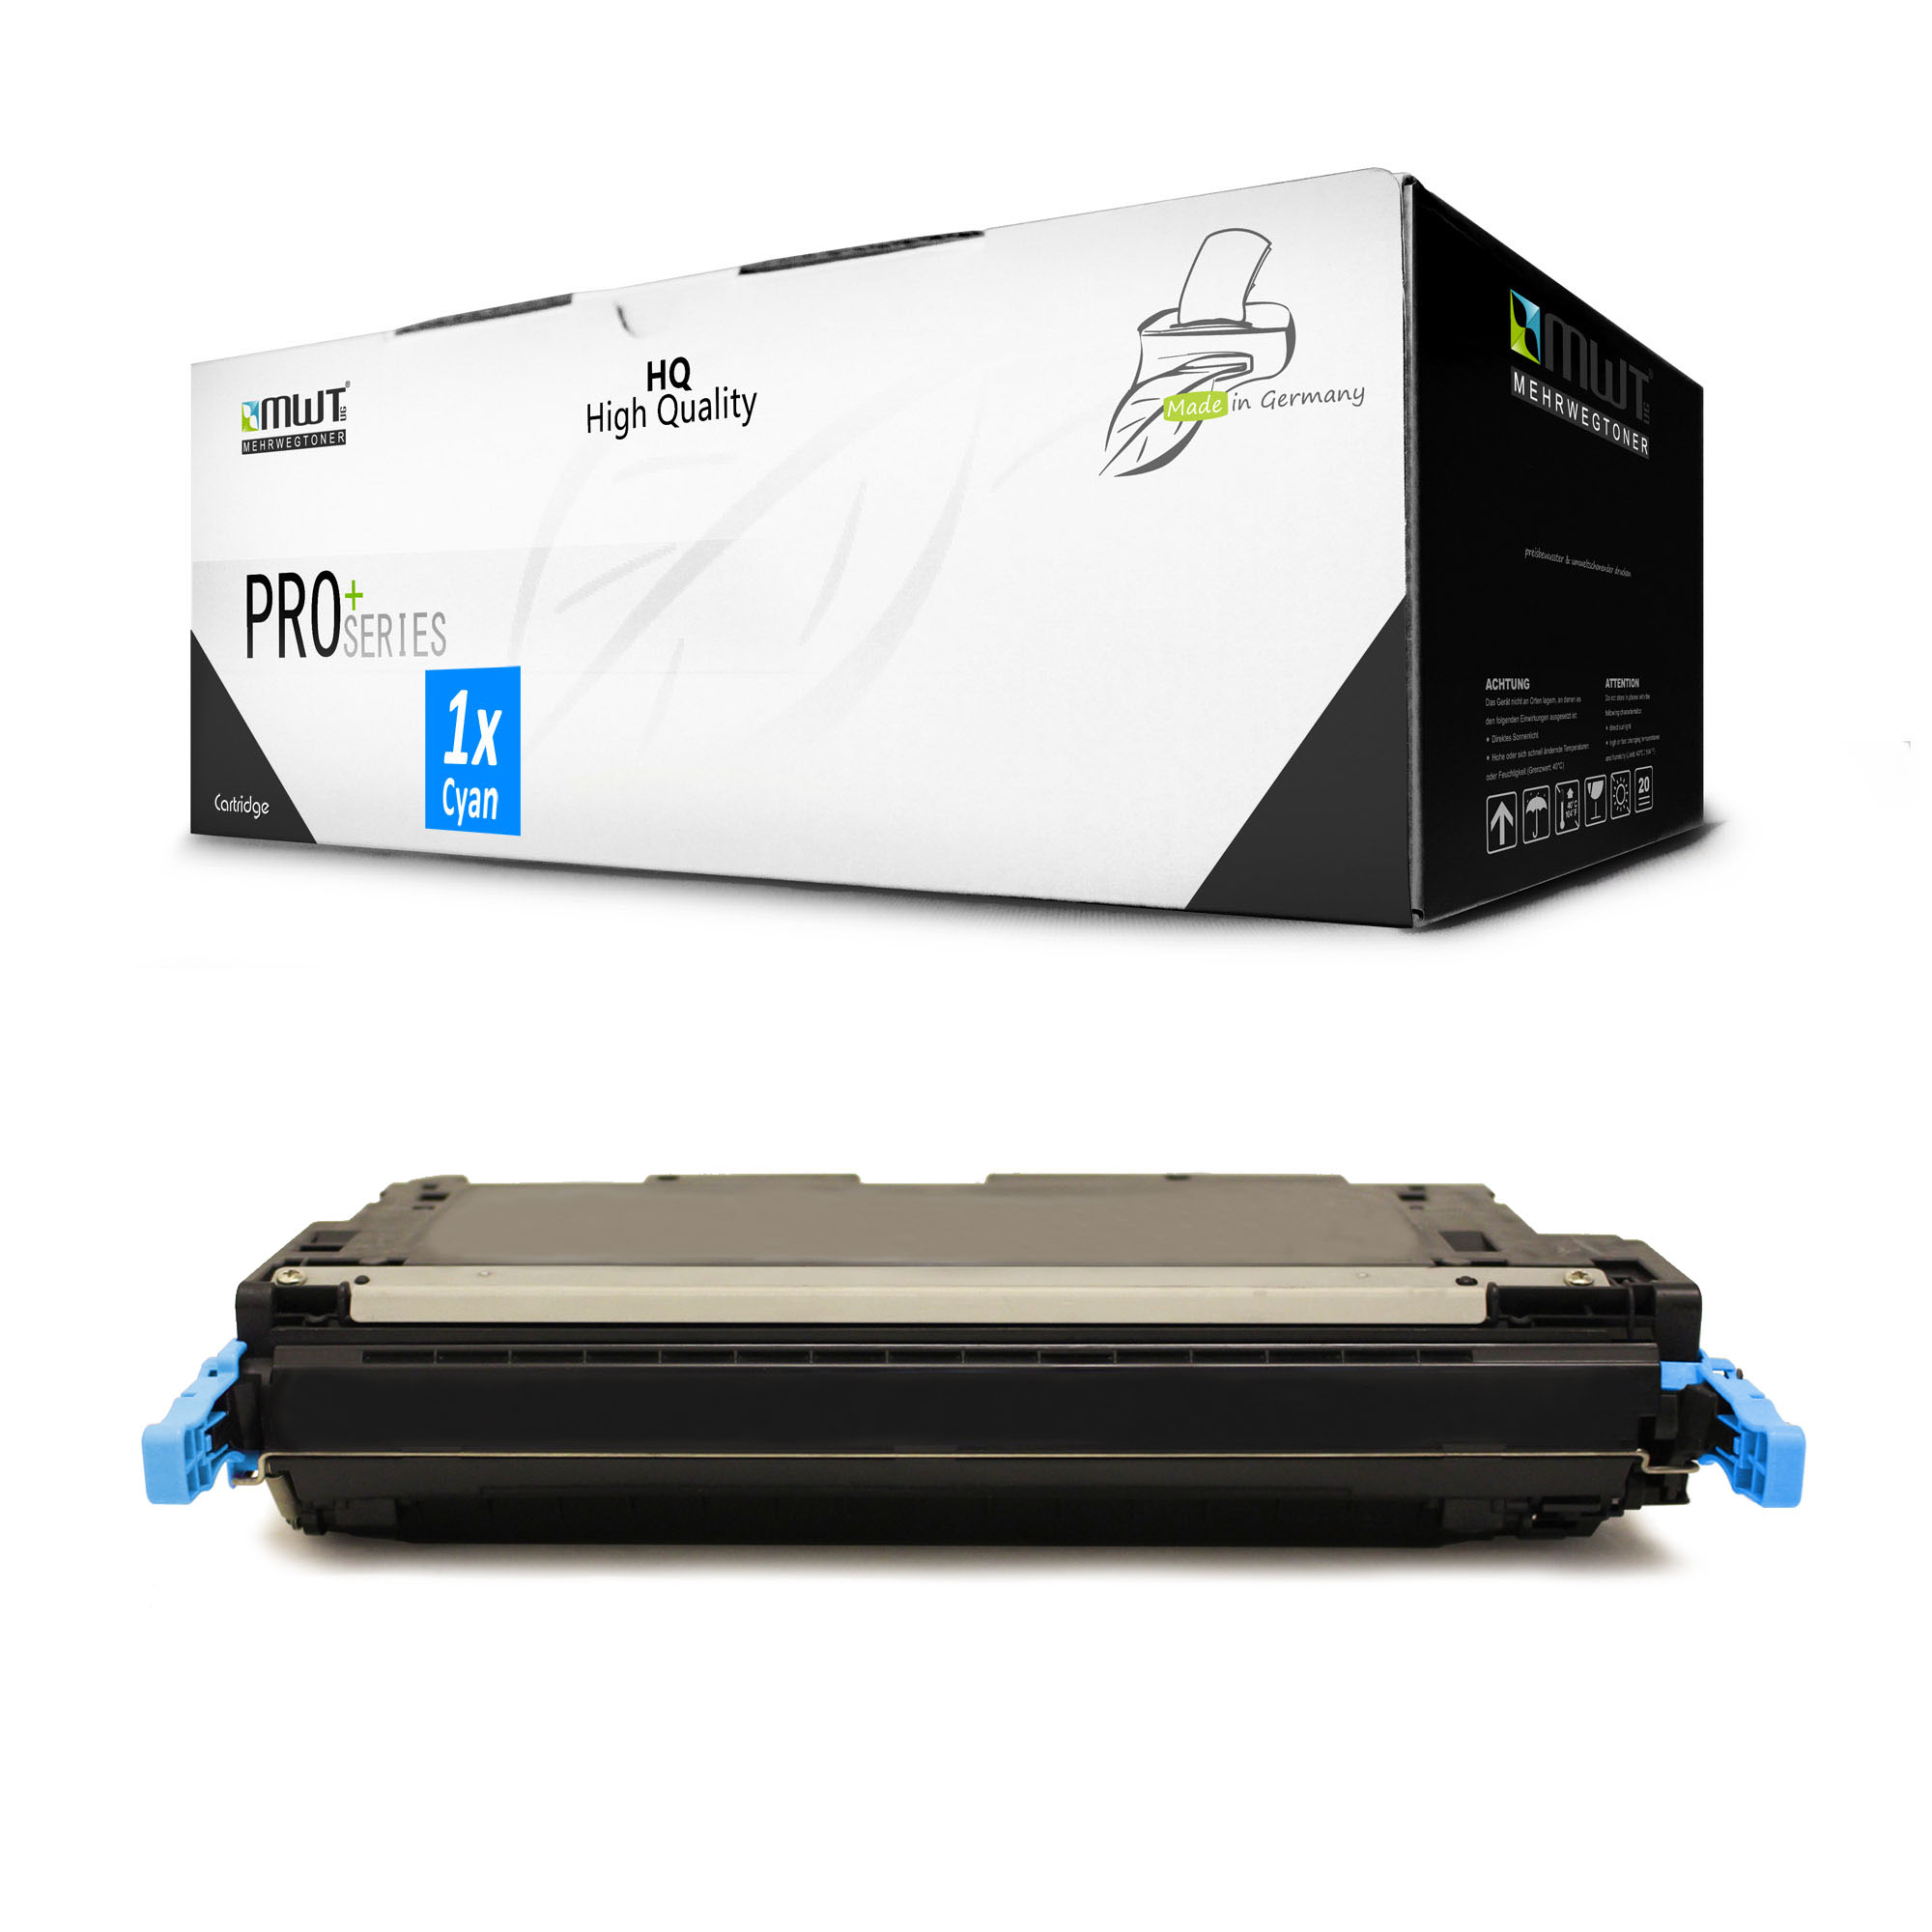 MEHRWEGTONER ersetzt HP 502A) / Q6471A (Q6471A / Cyan 502A Cartridge Toner